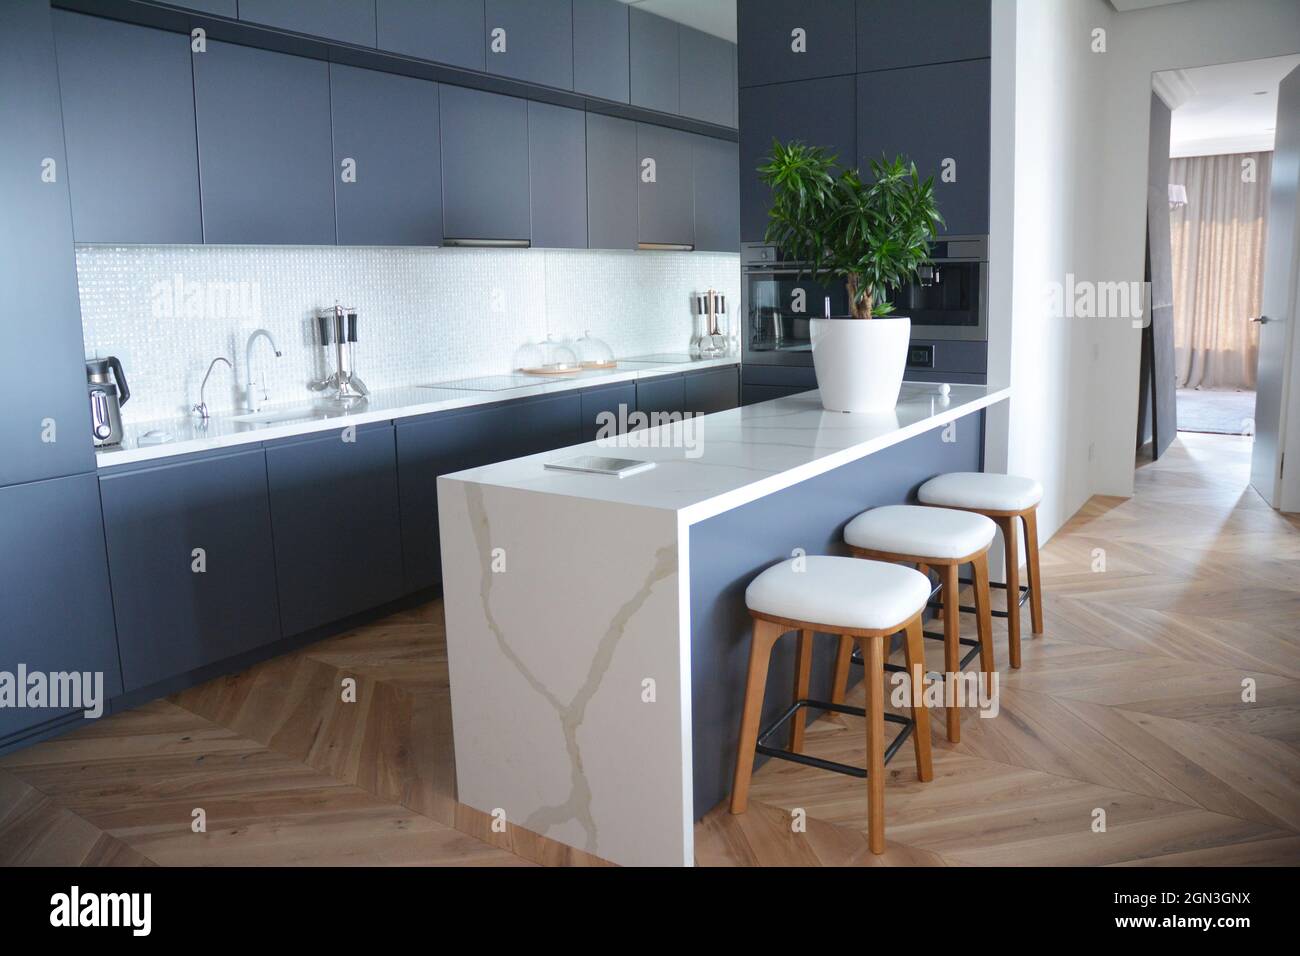 Modern kitchen interior design with hardwood floors in luxury home Stock Photo